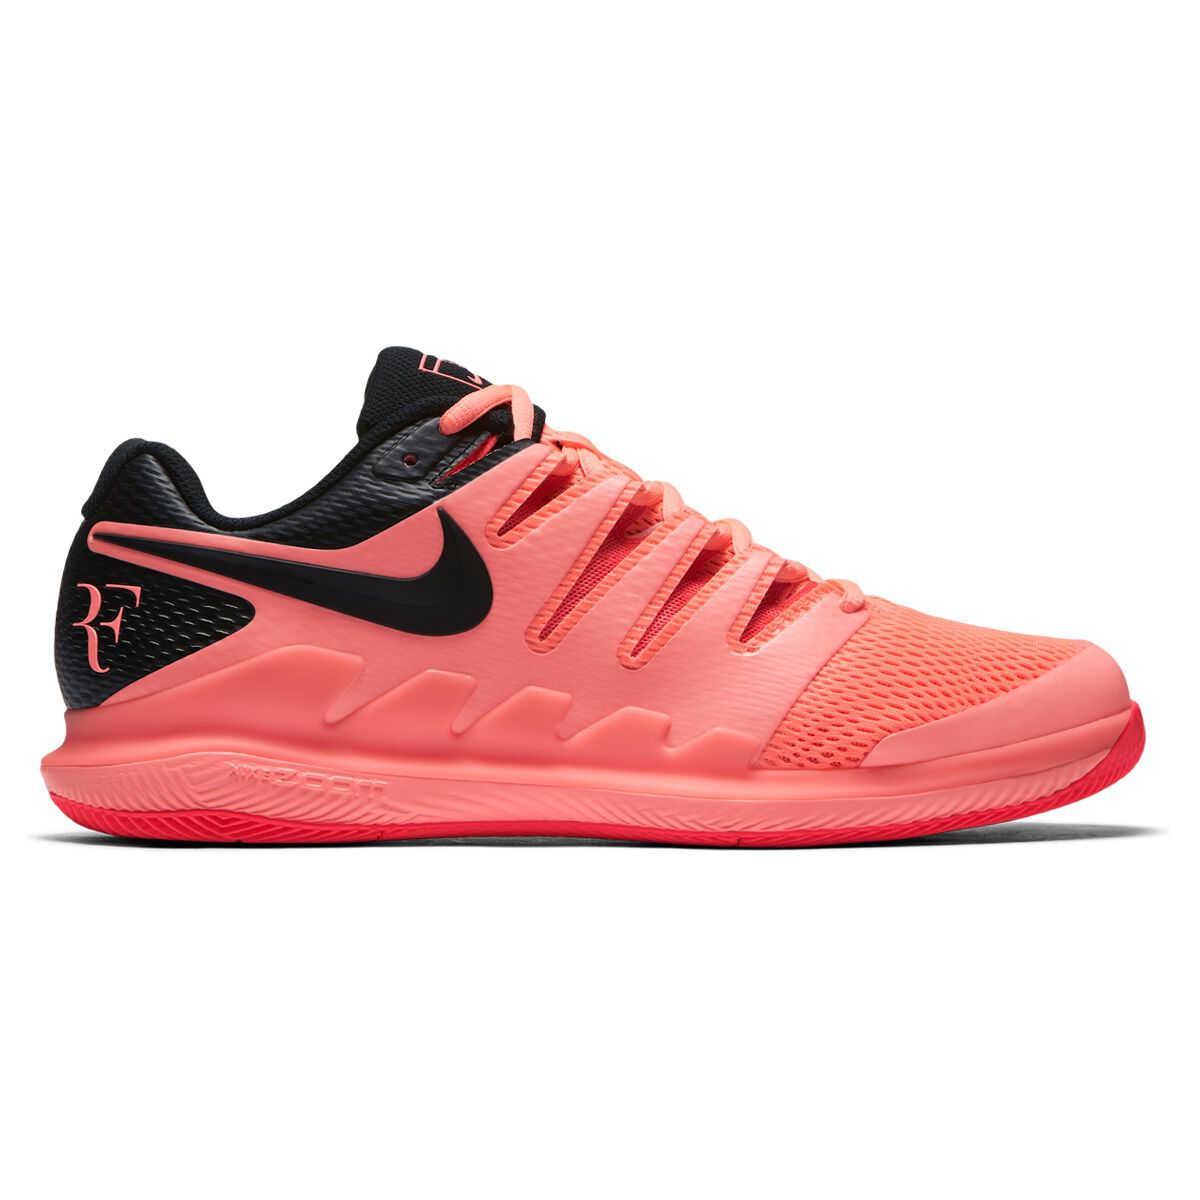 orange and black nike tennis shoes